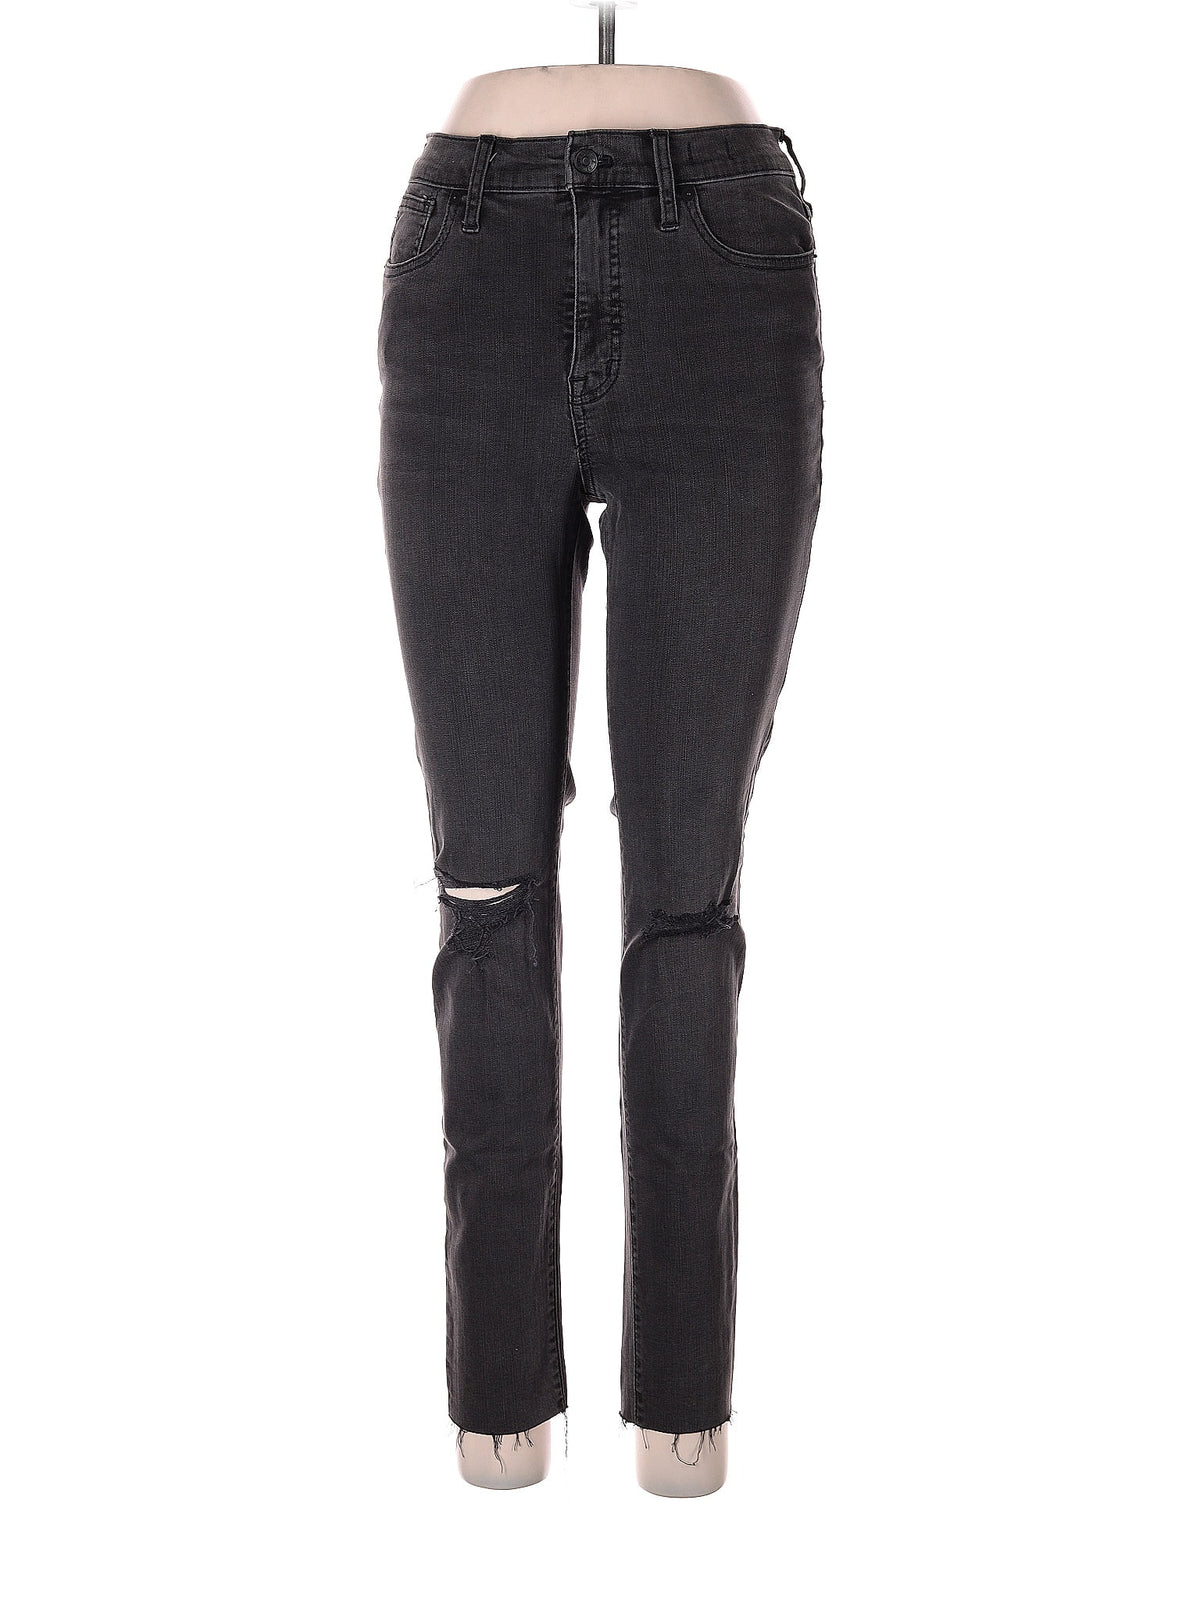 Mid-Rise Skinny Jeans in Dark Wash waist size - 29